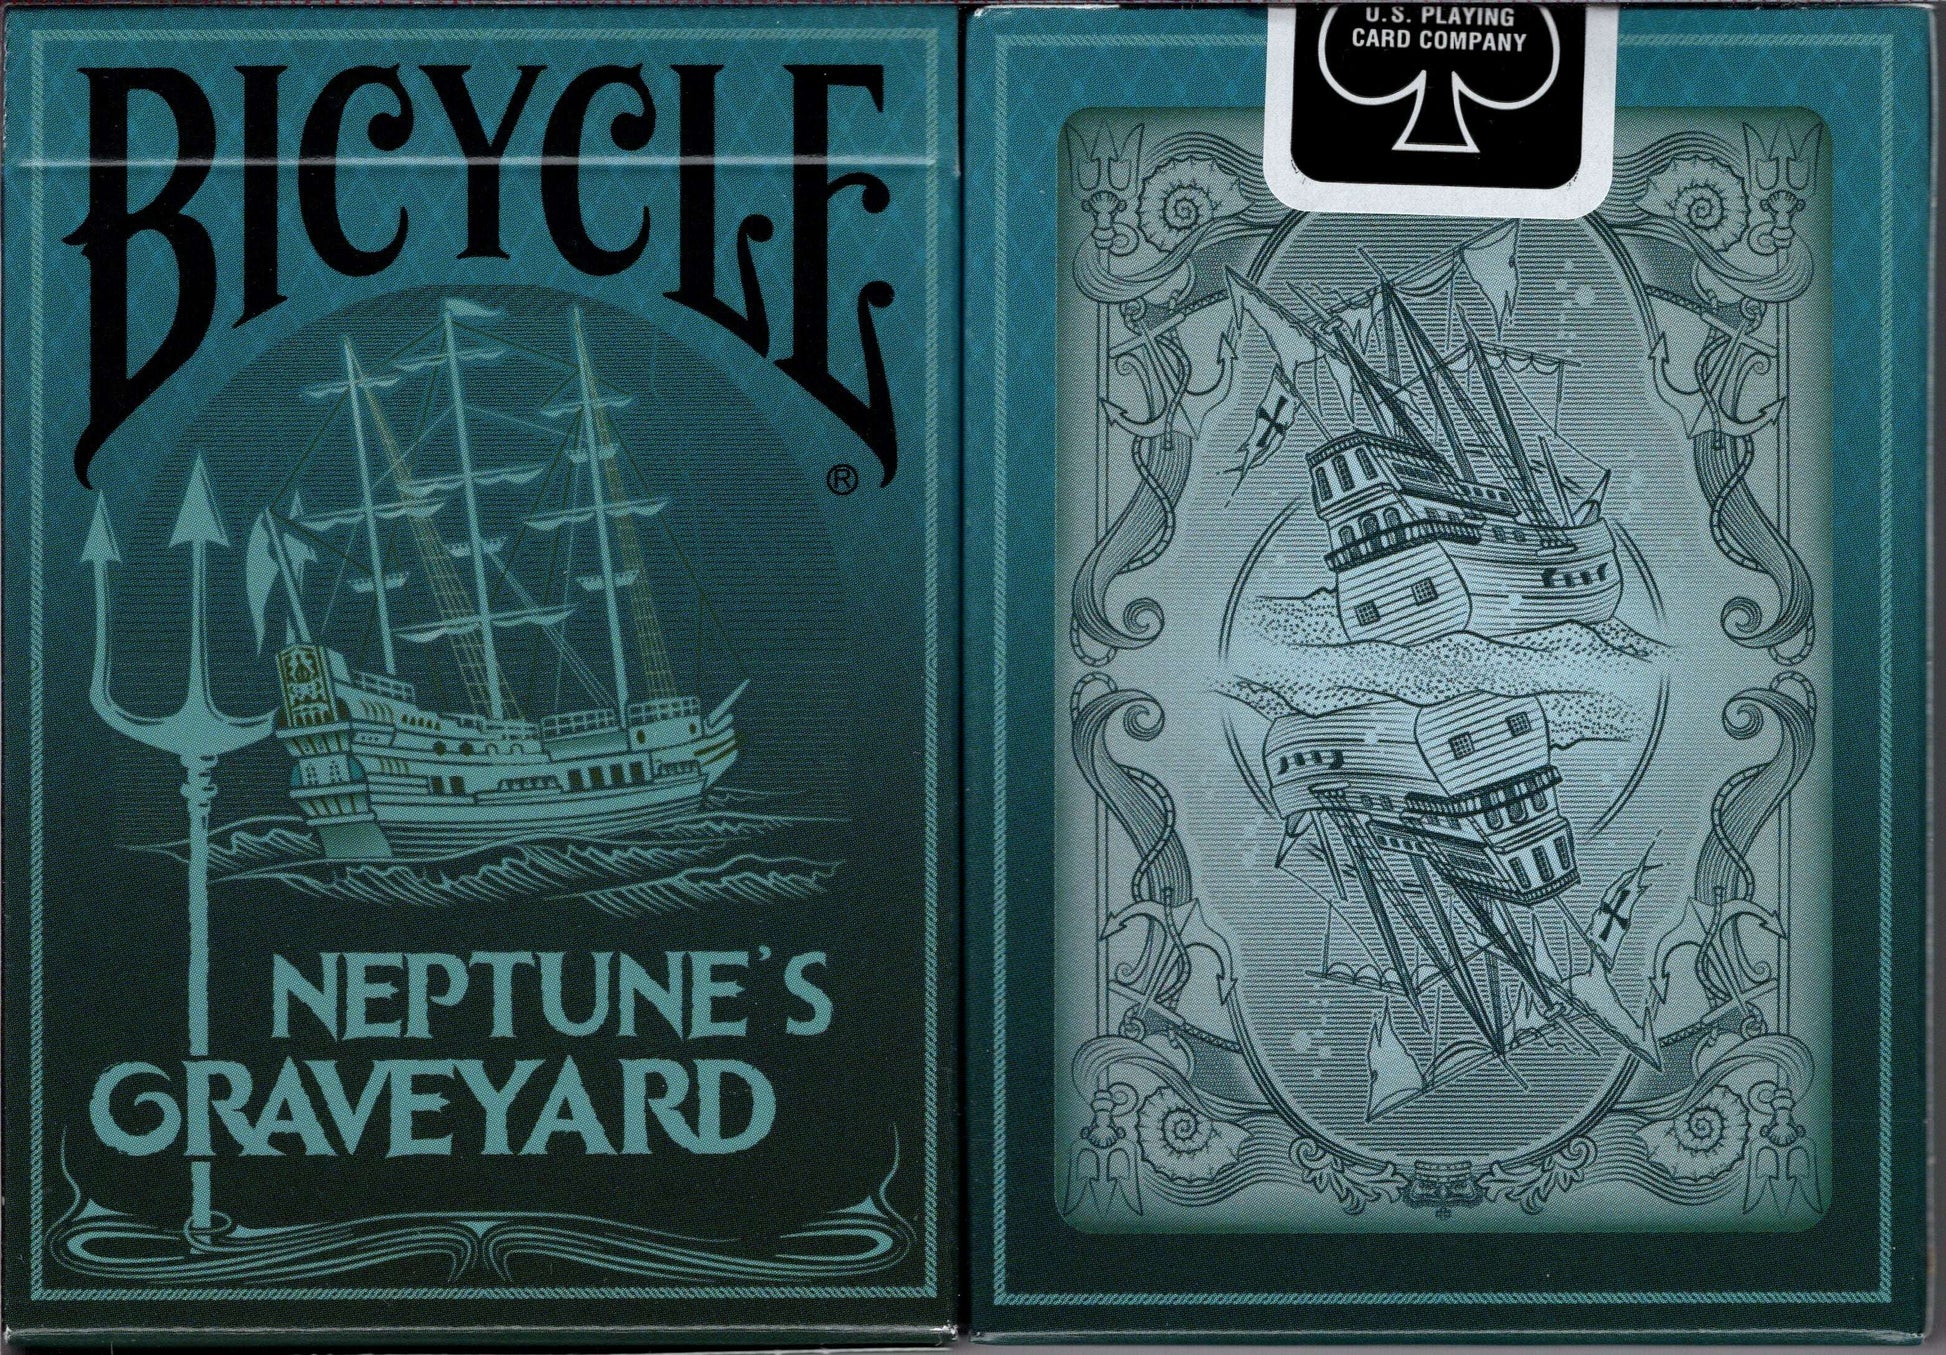 PlayingCardDecks.com-Neptune's Graveyard Bicycle Playing Cards: Ship